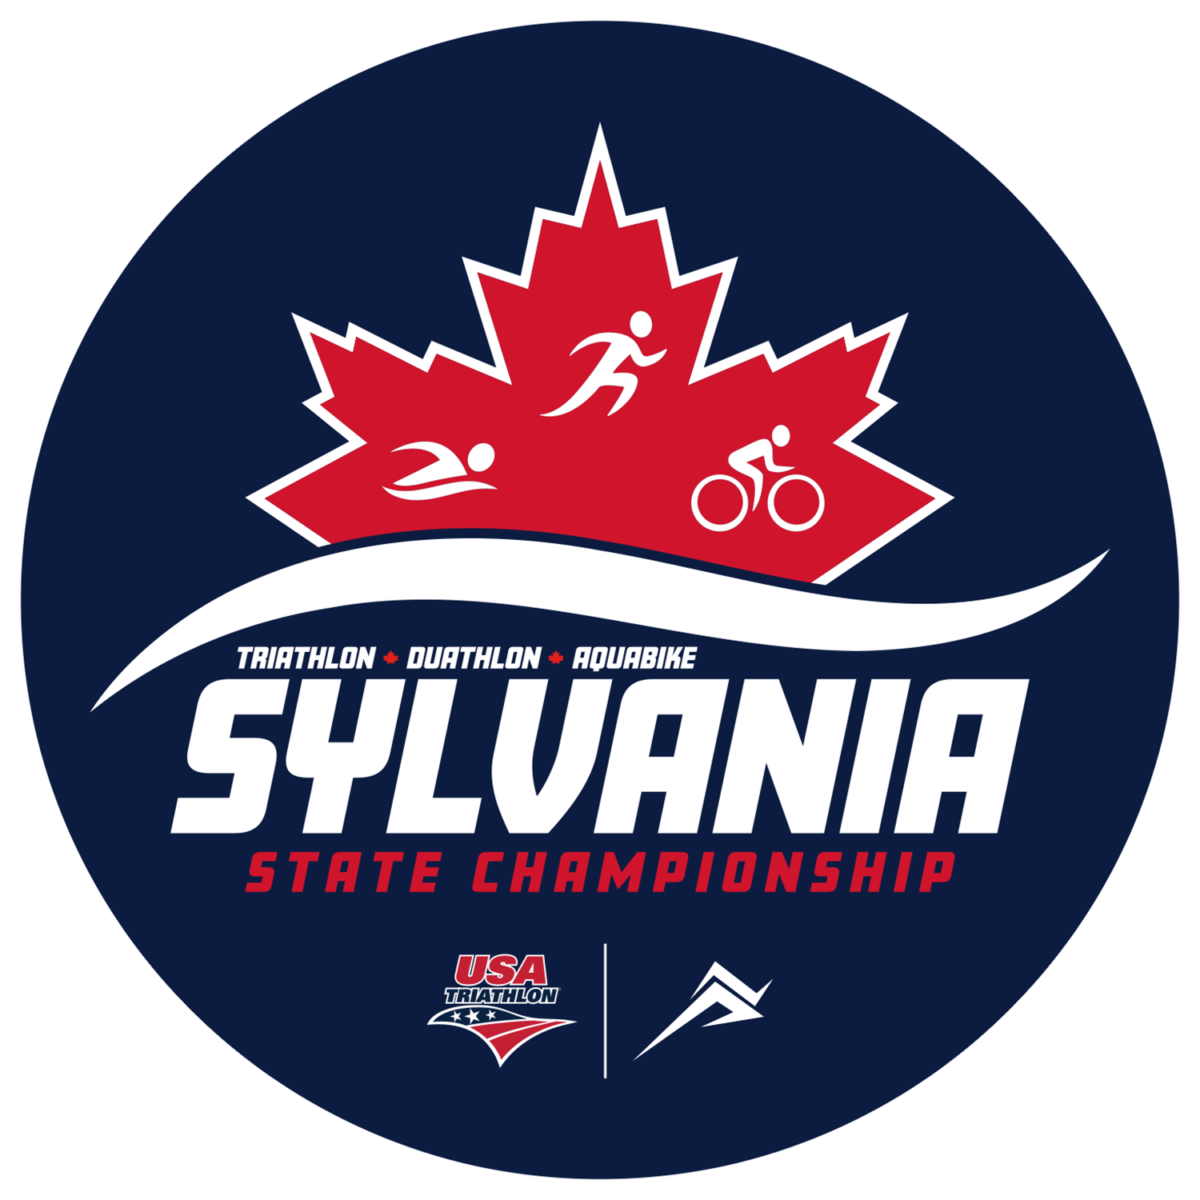 Sylvania Triathlon Duathlon Aquabike USA Triathlon Central Region Championship